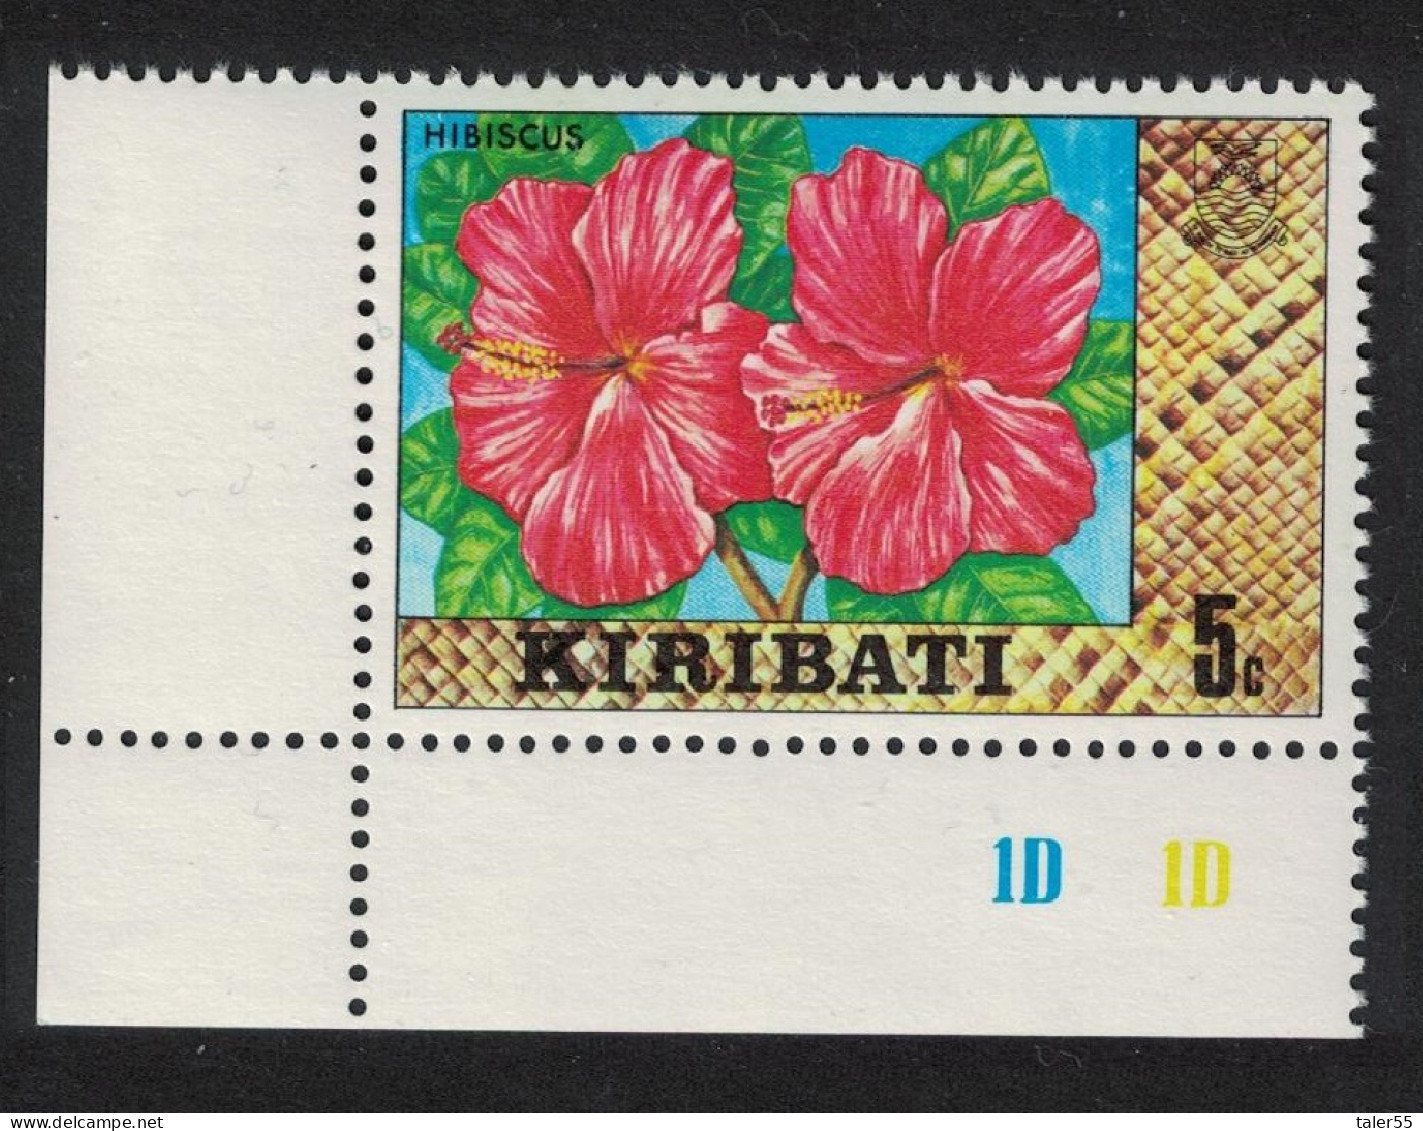 Kiribati Hibiscus Flower 5c Corner 1980 MNH SG#123 - Kiribati (1979-...)